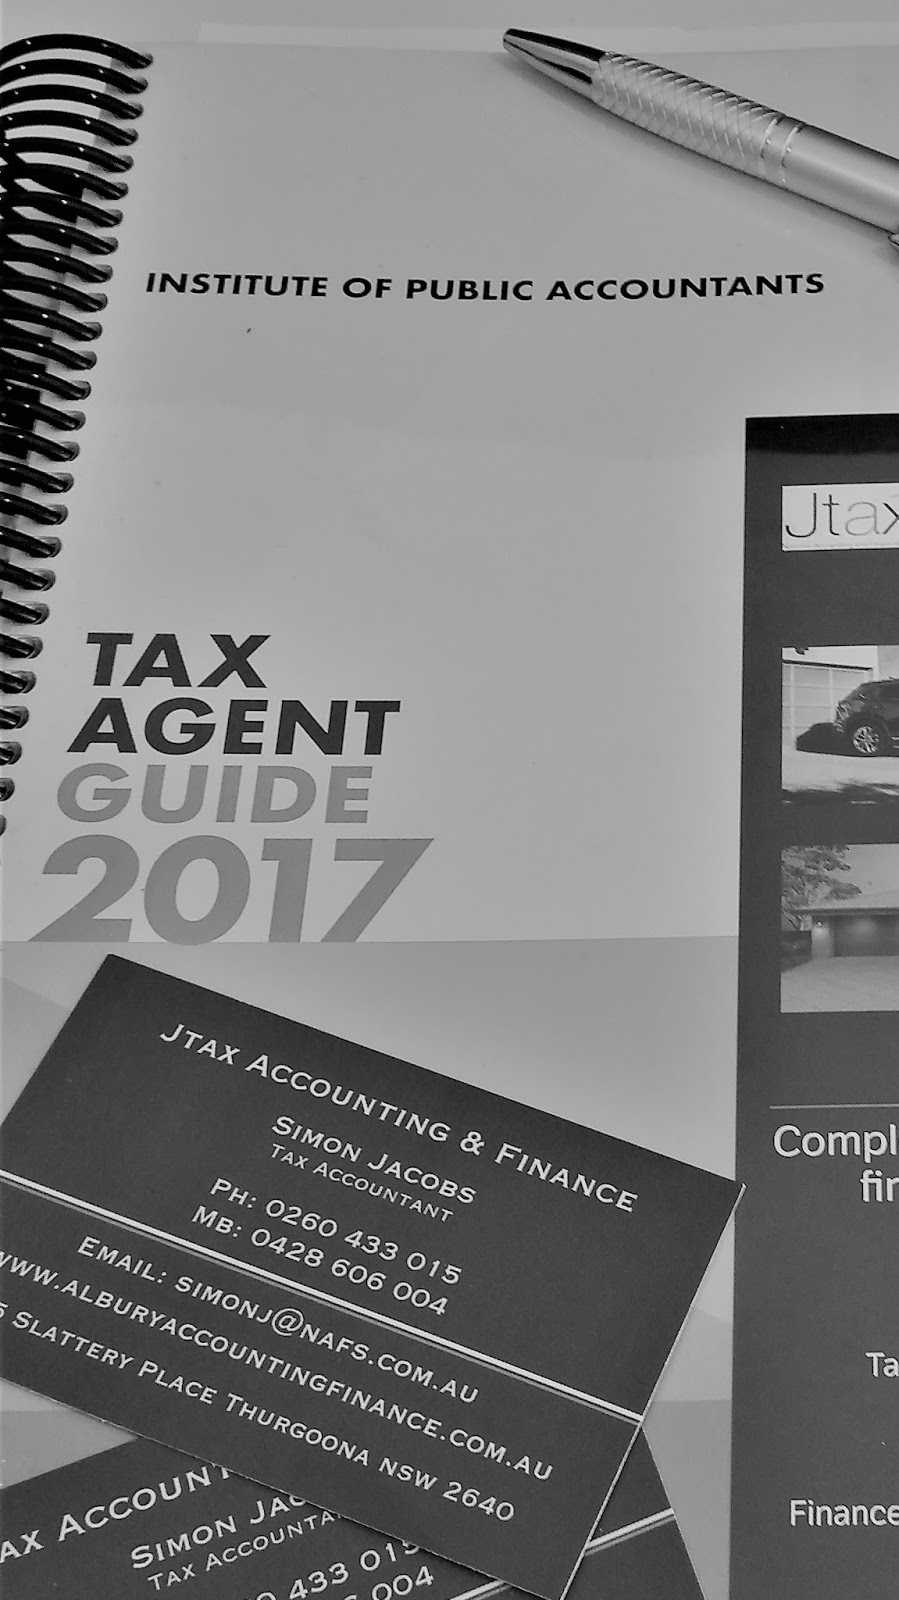 Jtax Accounting & Finance Albury | insurance agency | 35 Slattery Pl, Thurgoona NSW 2640, Australia | 0428606004 OR +61 428 606 004